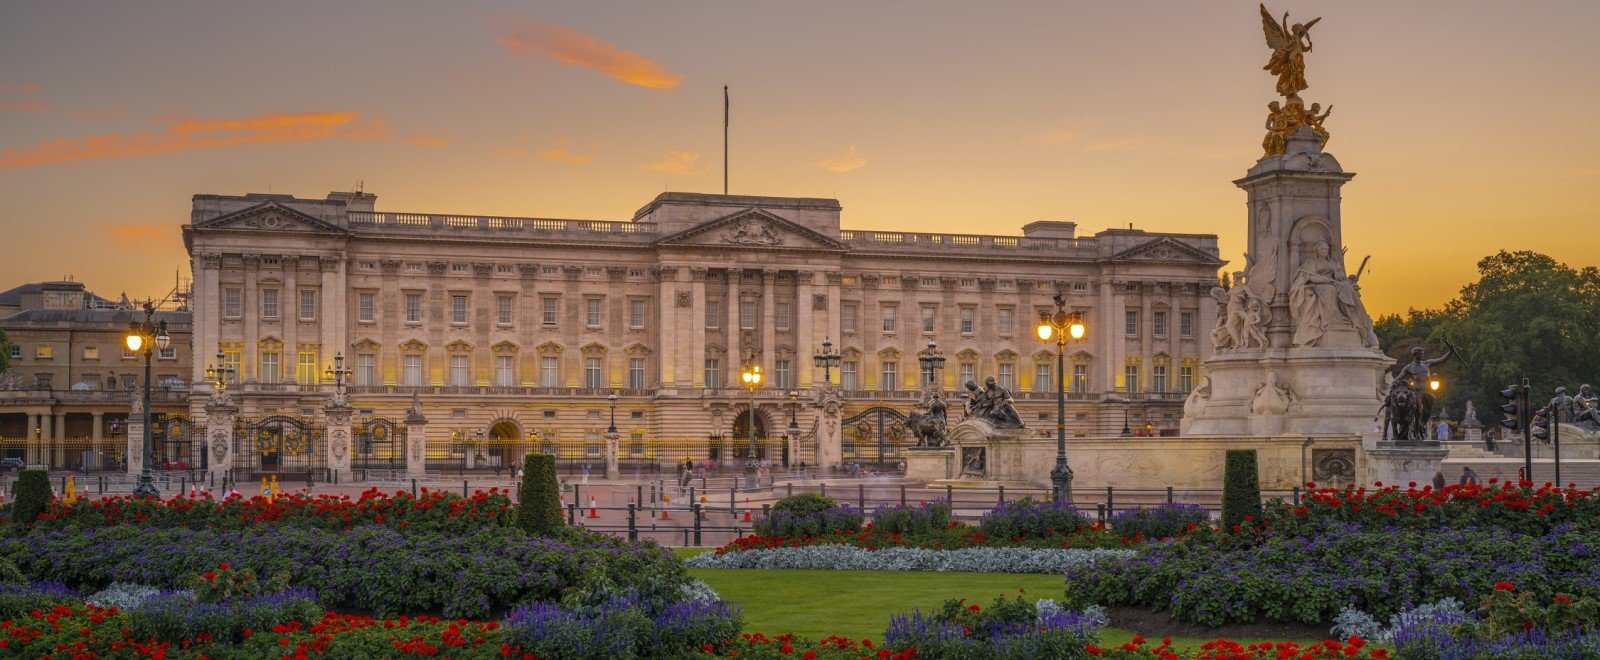 Buckingham Palace in morning light